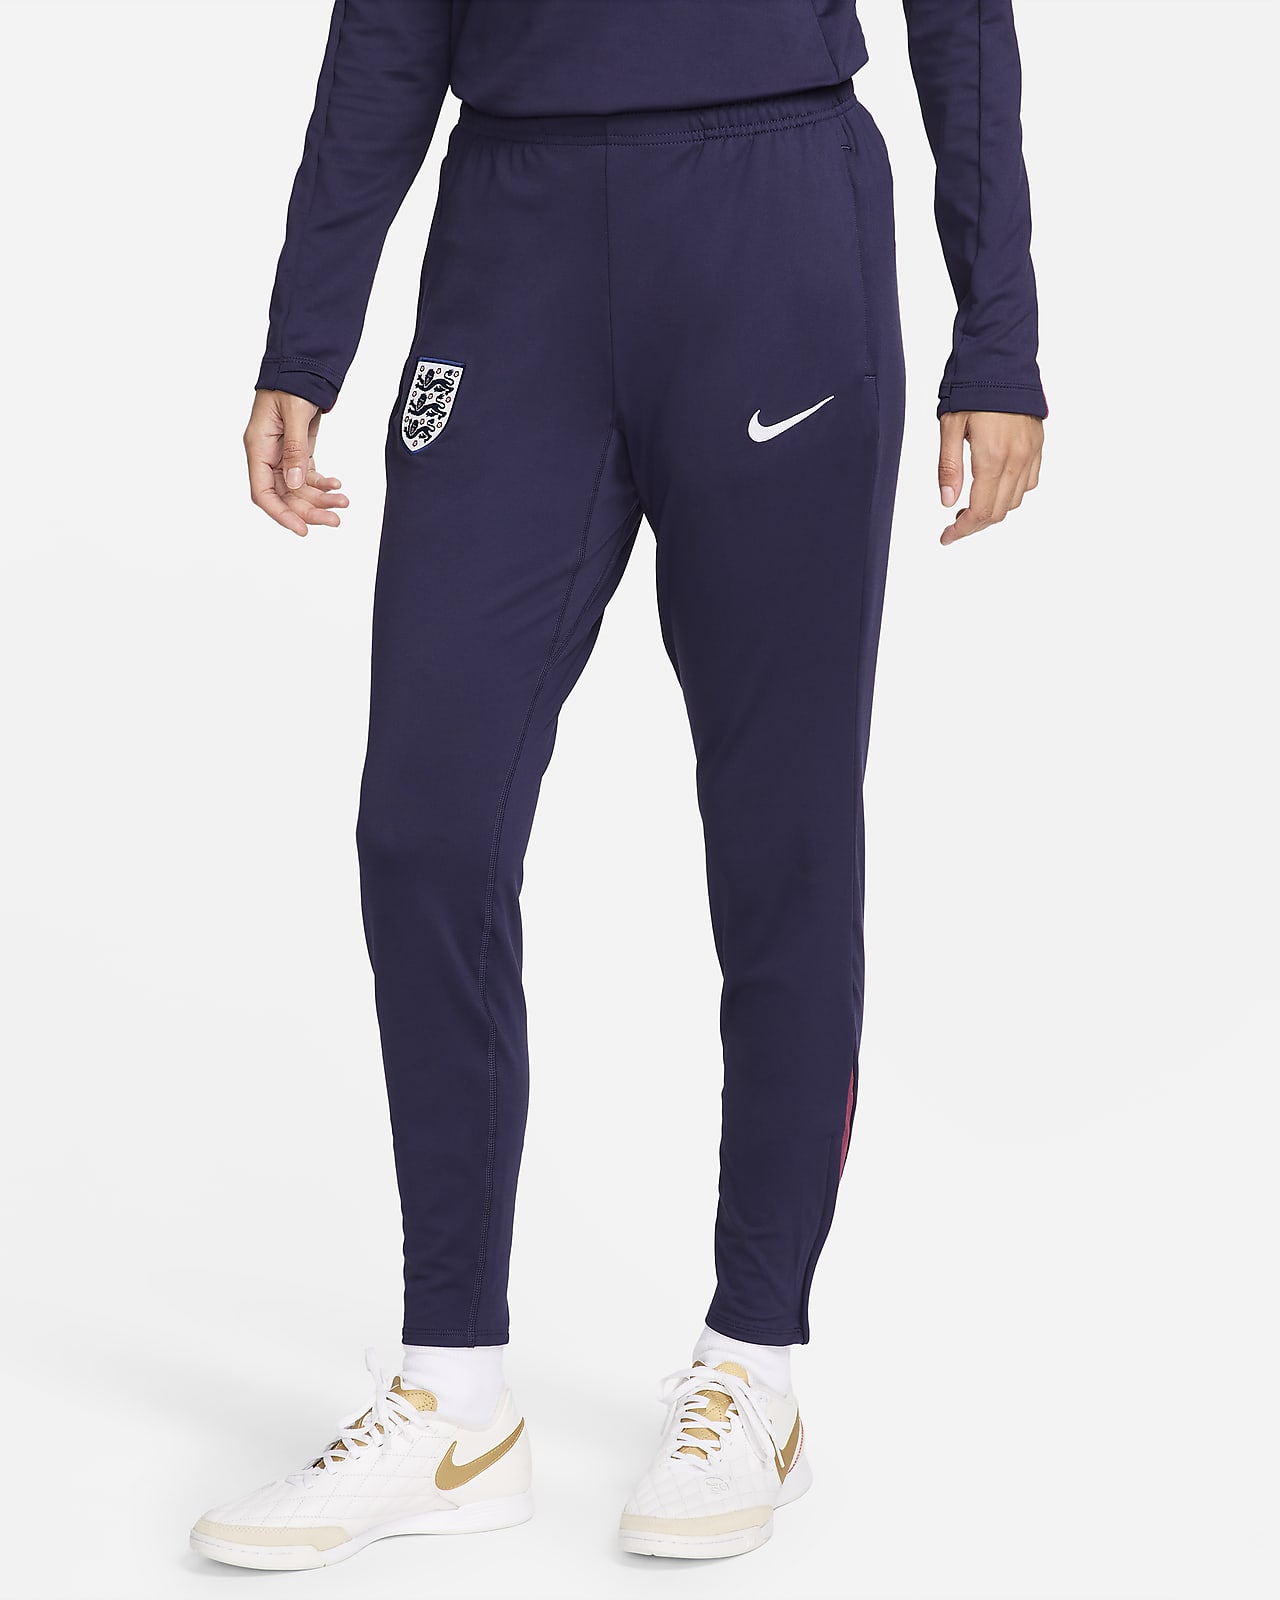 England Strike Nike Dri-FIT Strick-Fußballhose (Damen)